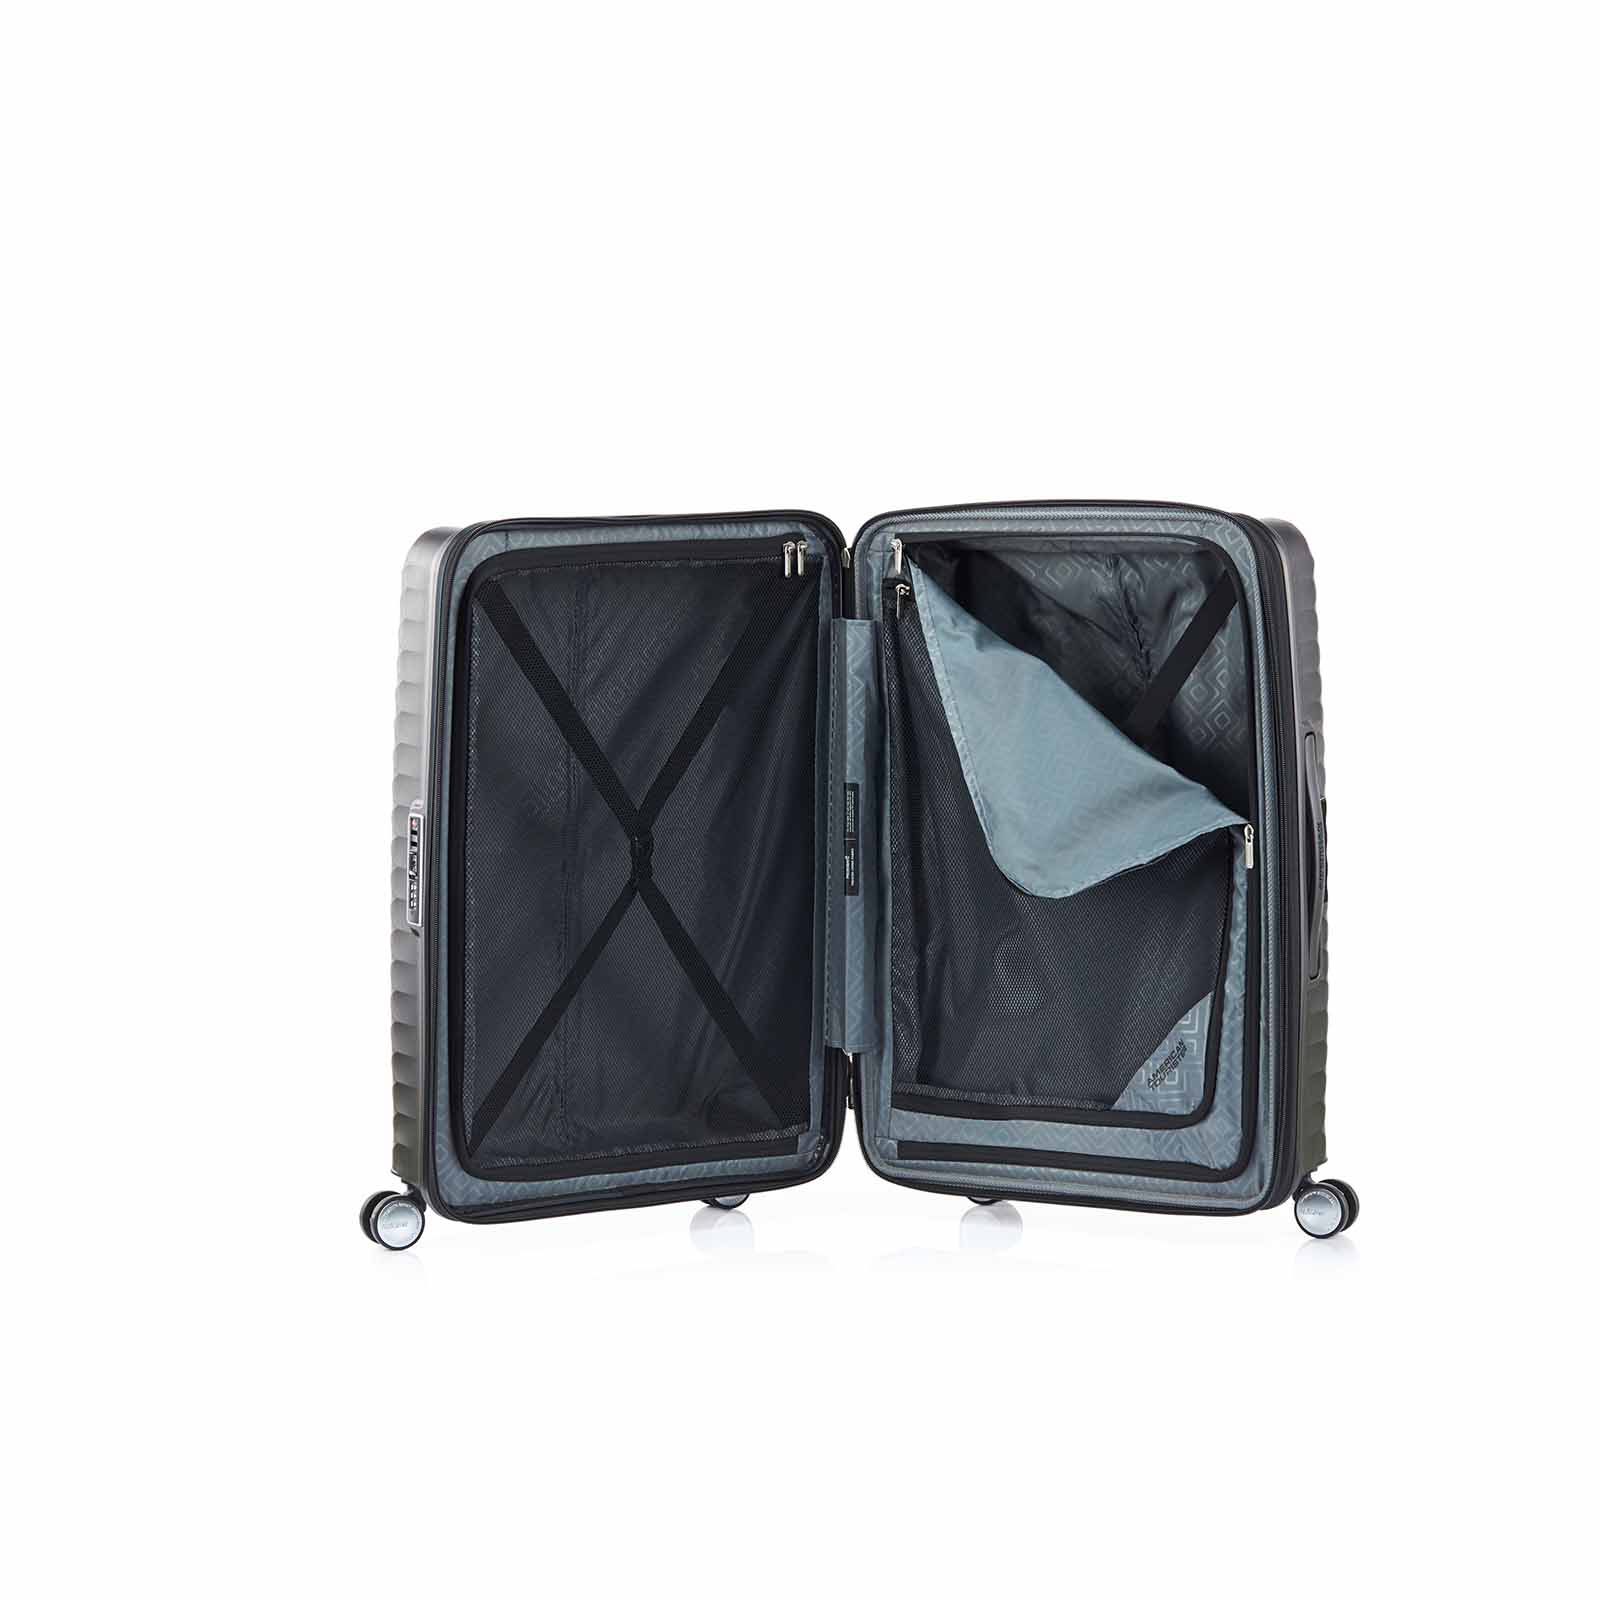 American-Tourister-Squasem-66cm-Suitcase-Black-Open